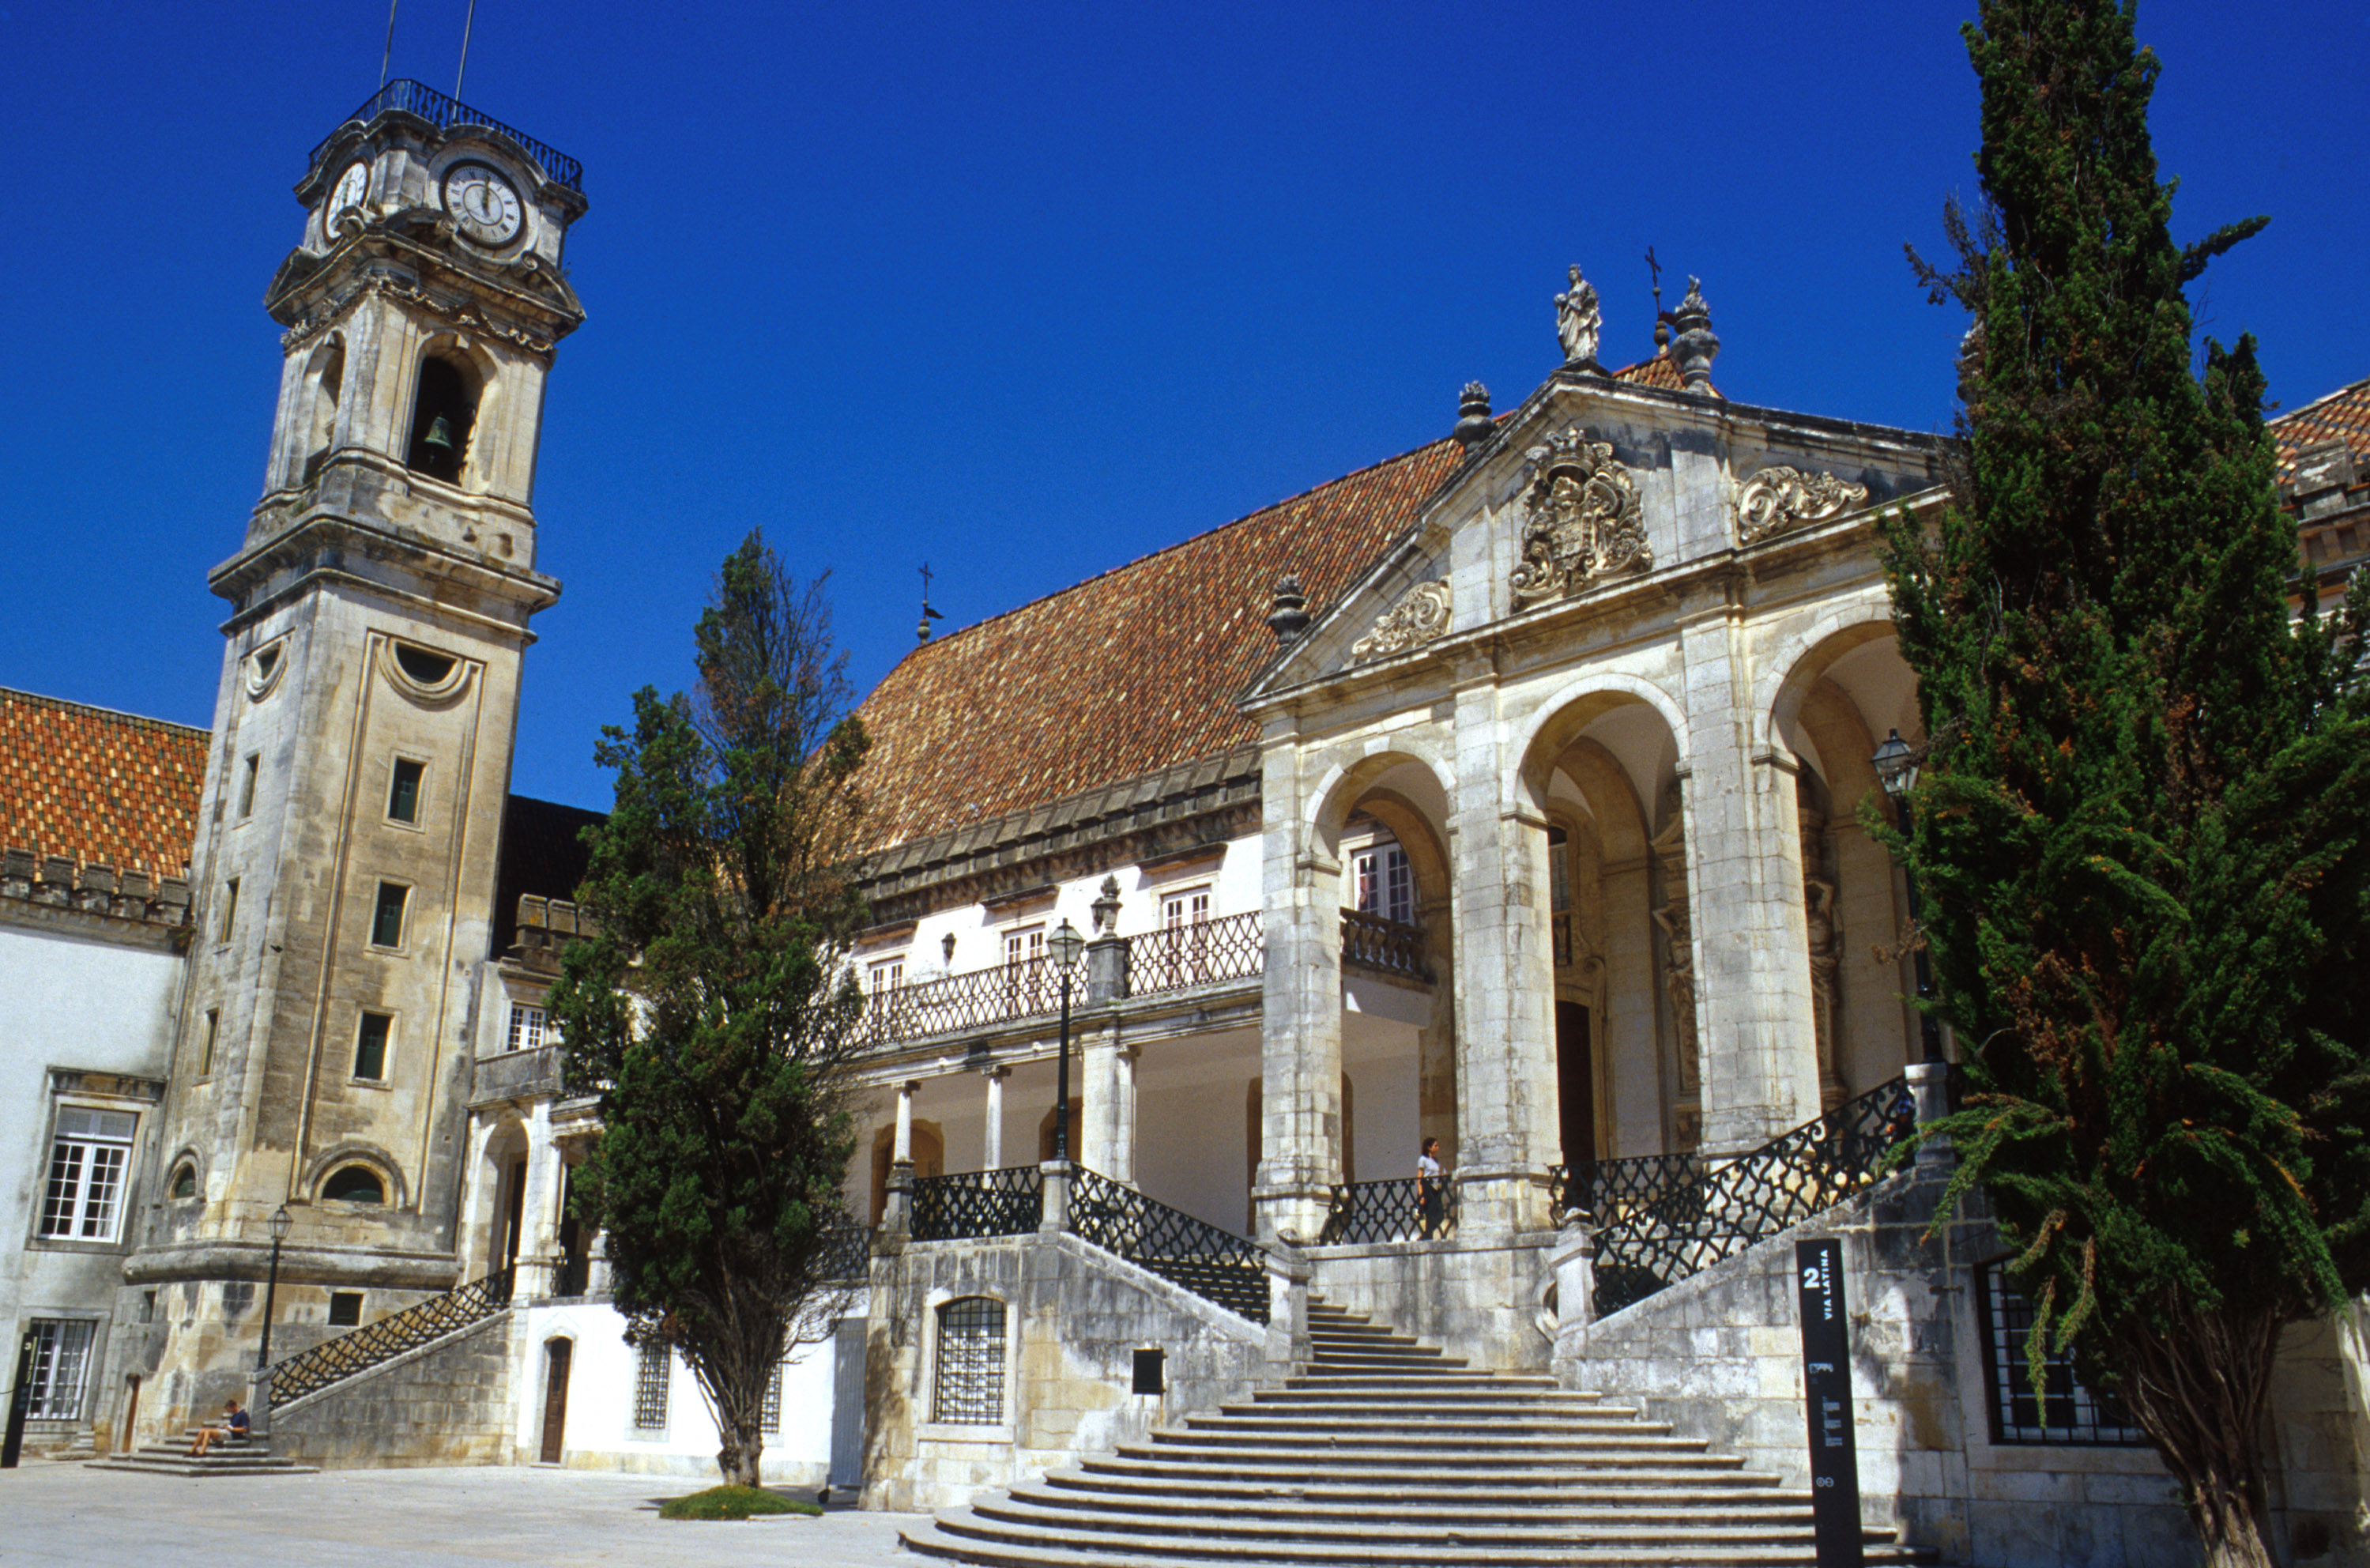 The University of Coimbra